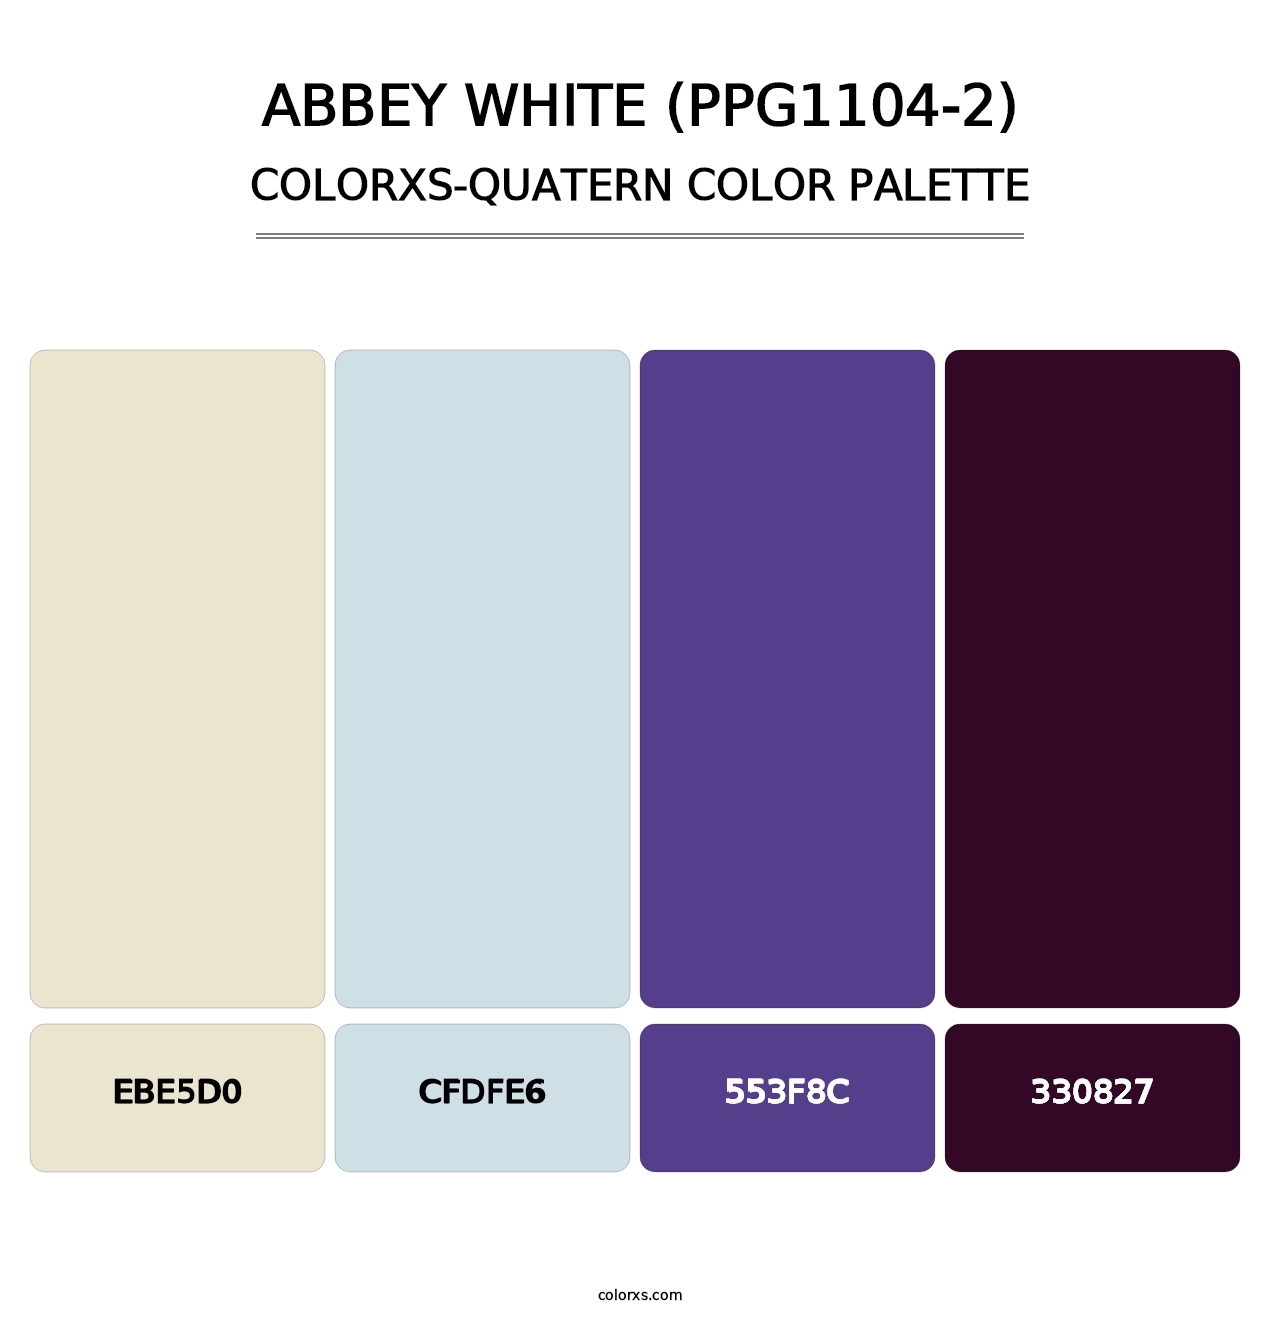 Abbey White (PPG1104-2) - Colorxs Quatern Palette